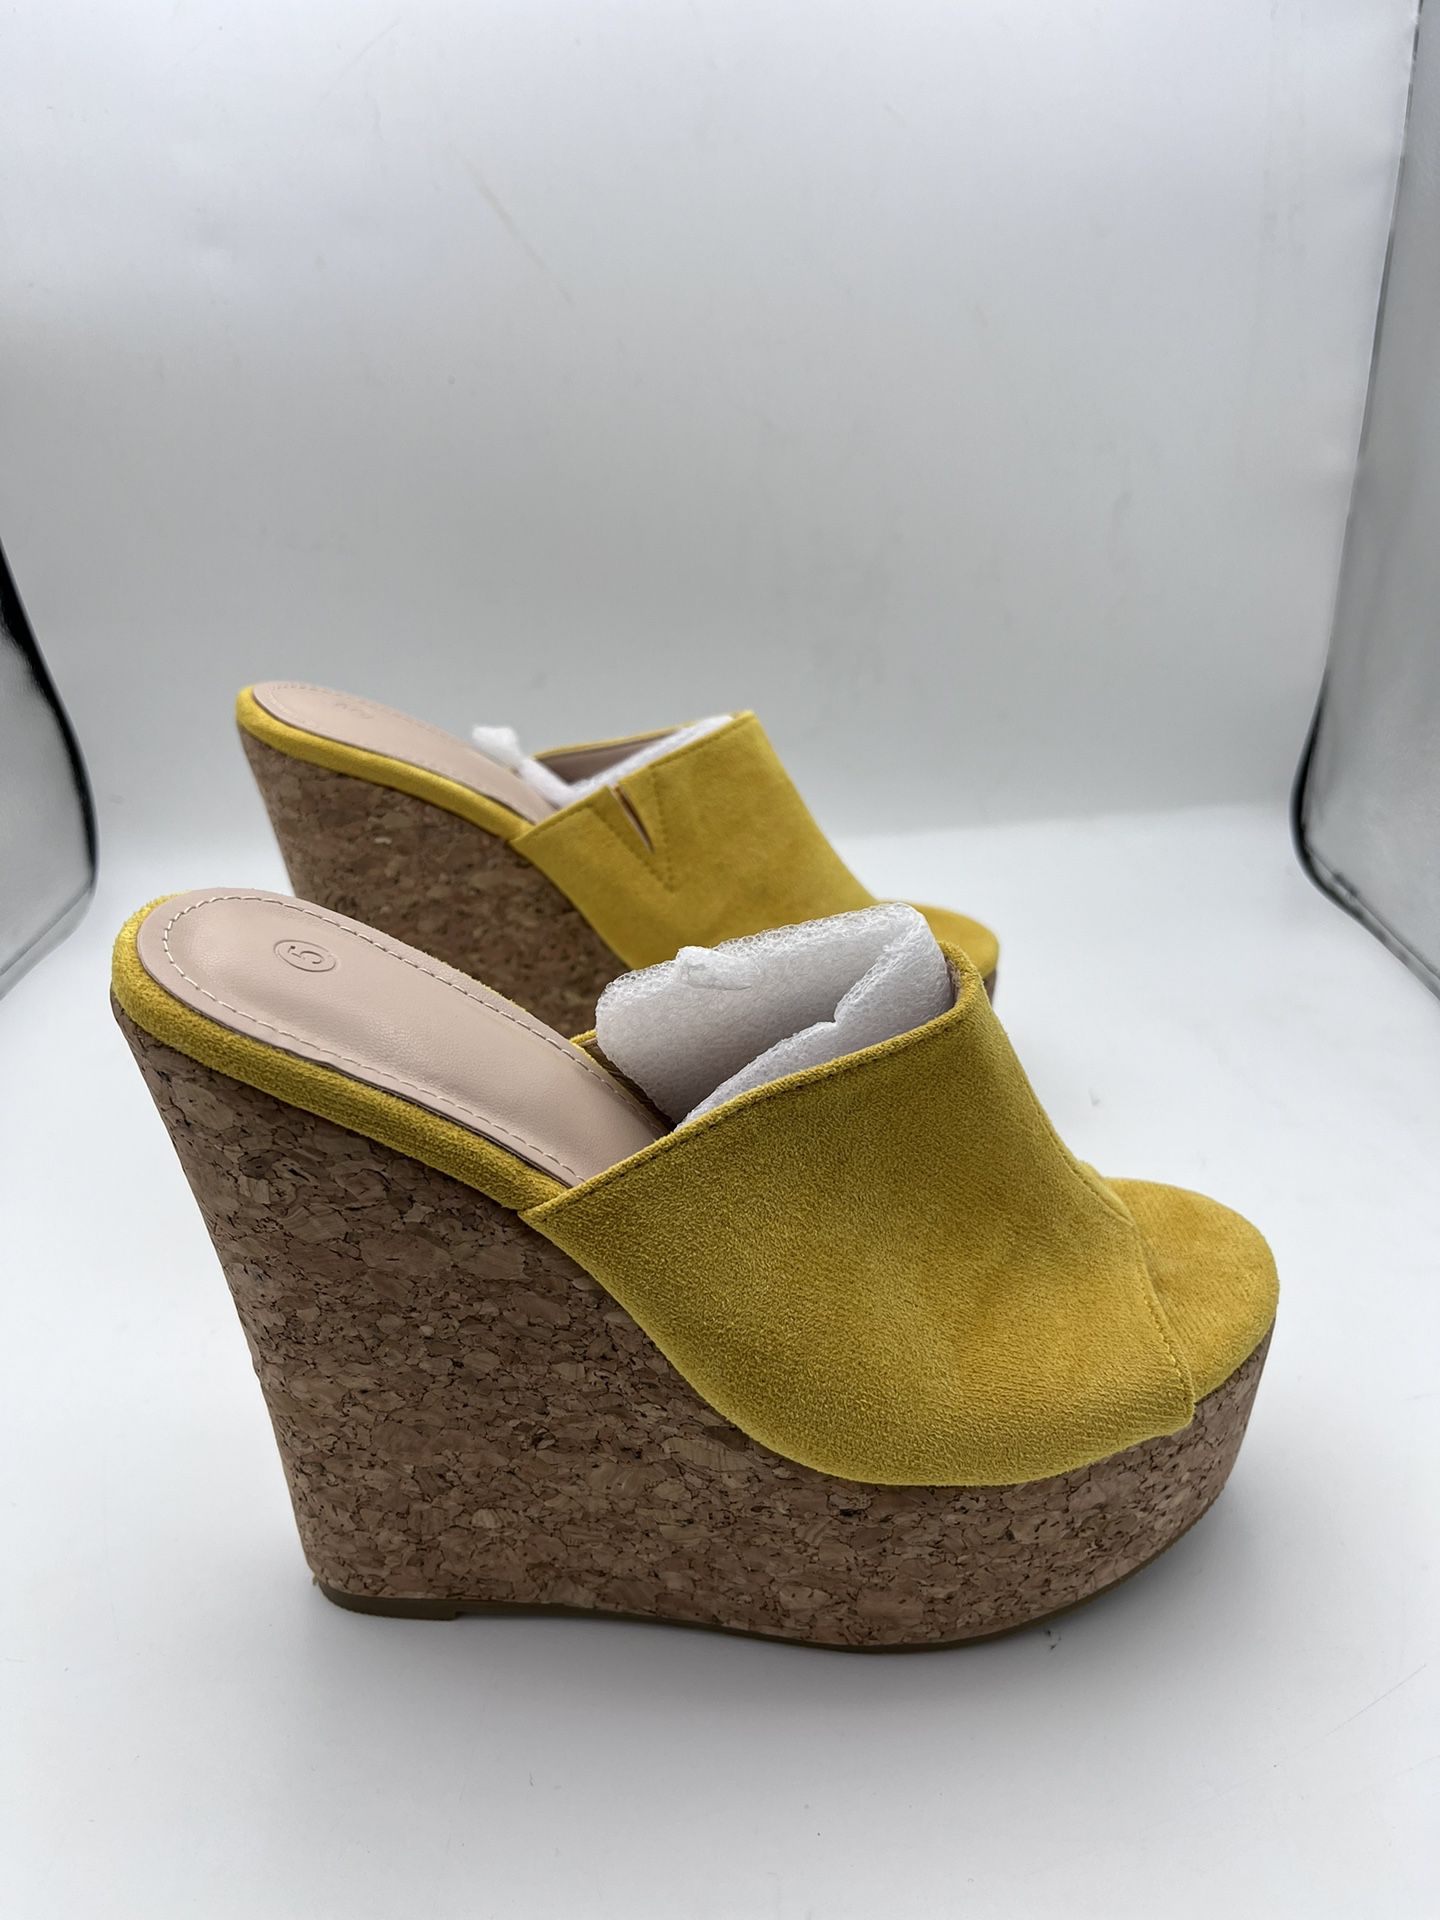 LAICIGO Womens Wedge Platform Slide on Sandals Open Toe Sandals Yellow Size 5